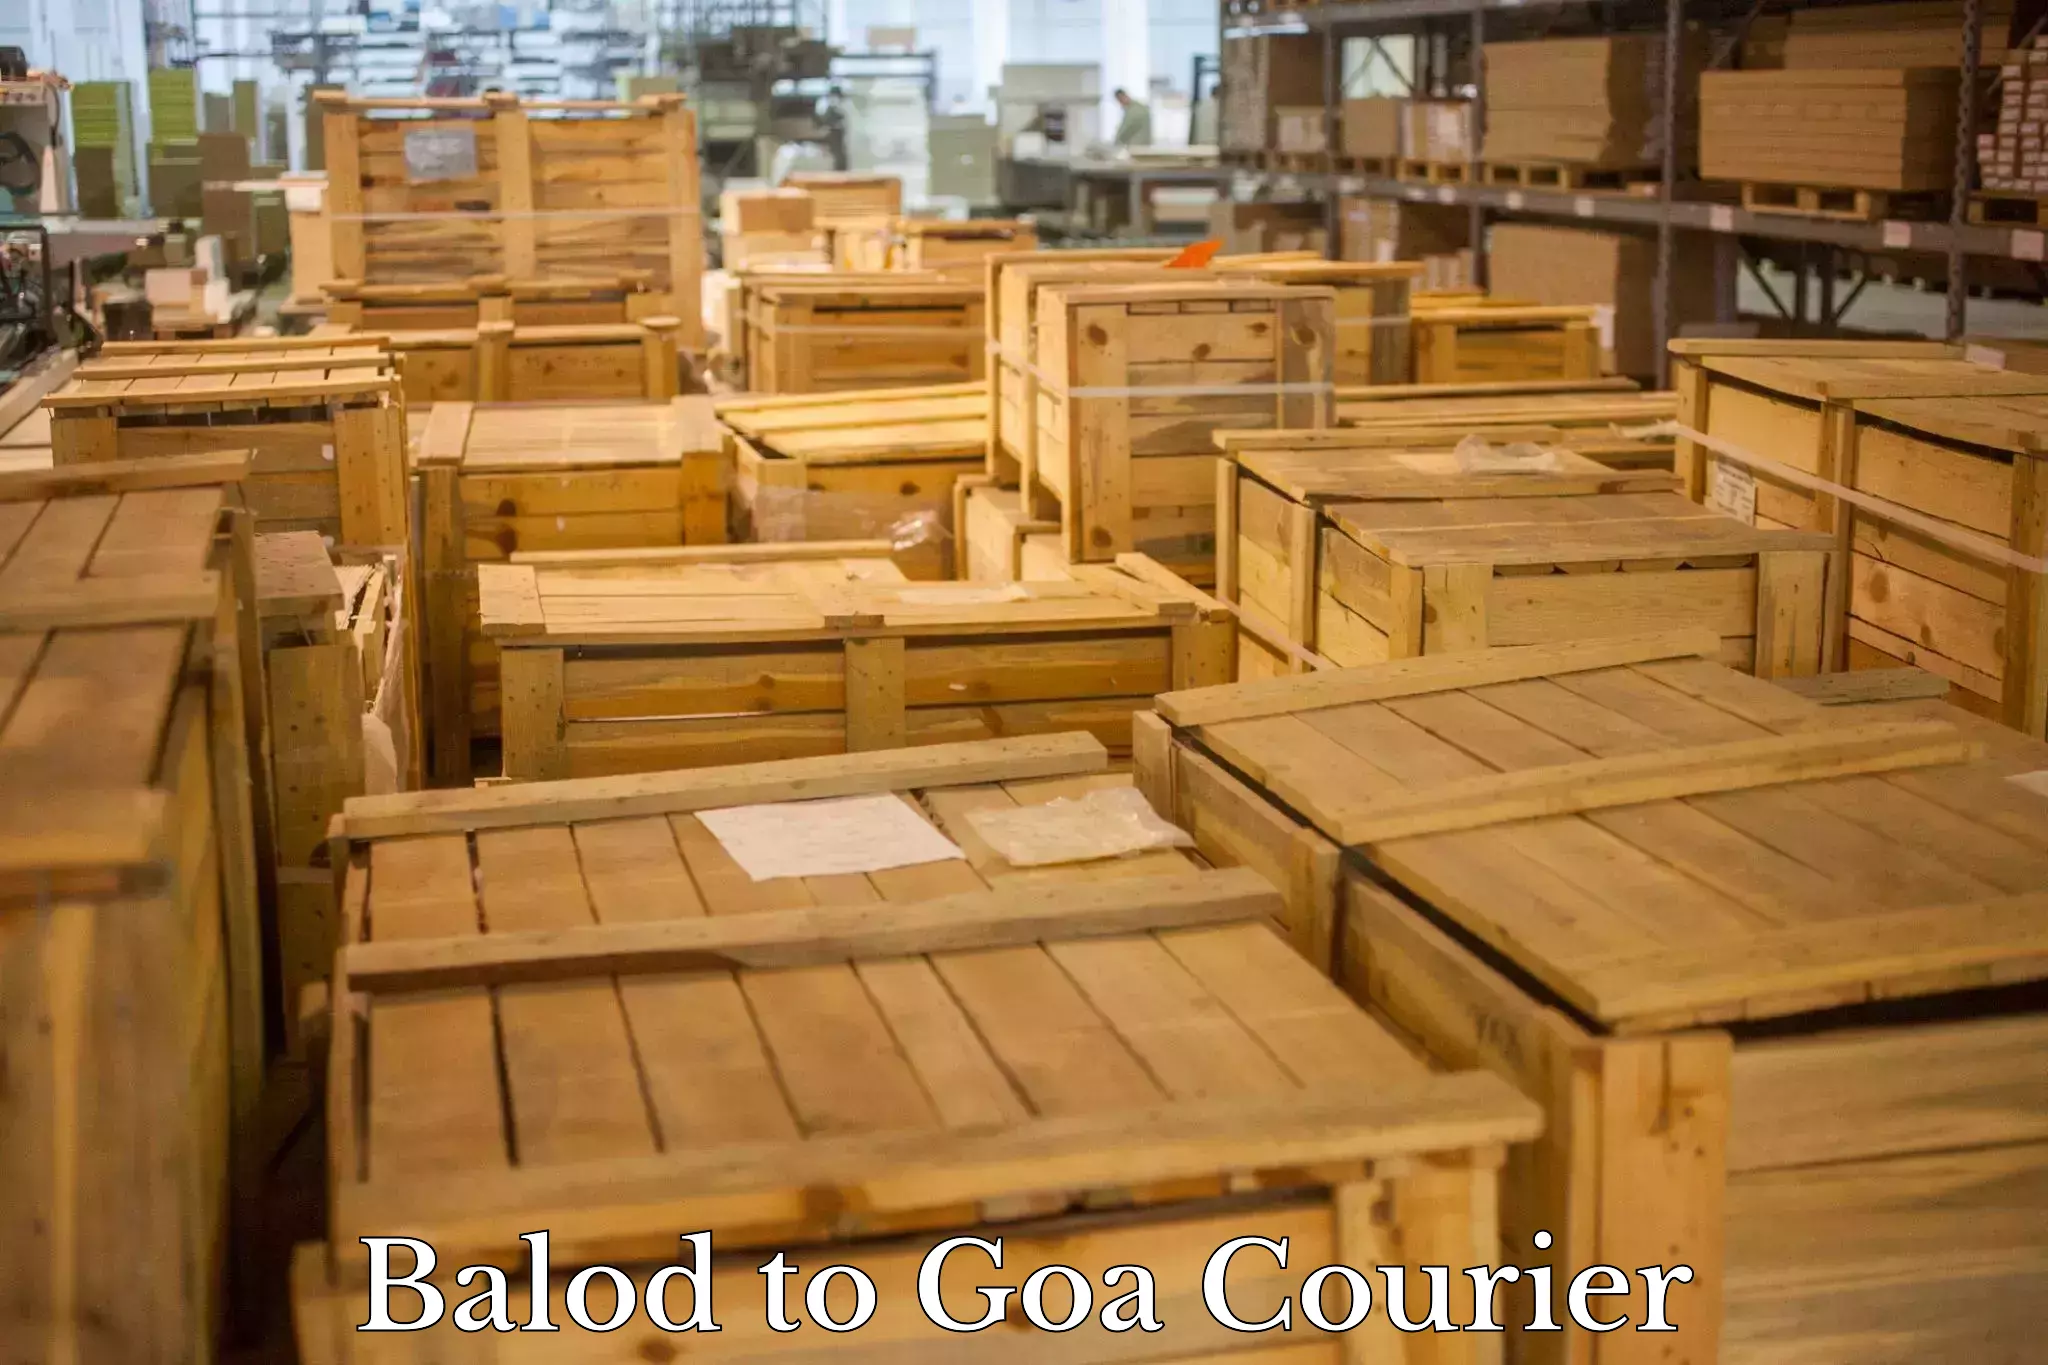 Global logistics network Balod to Goa